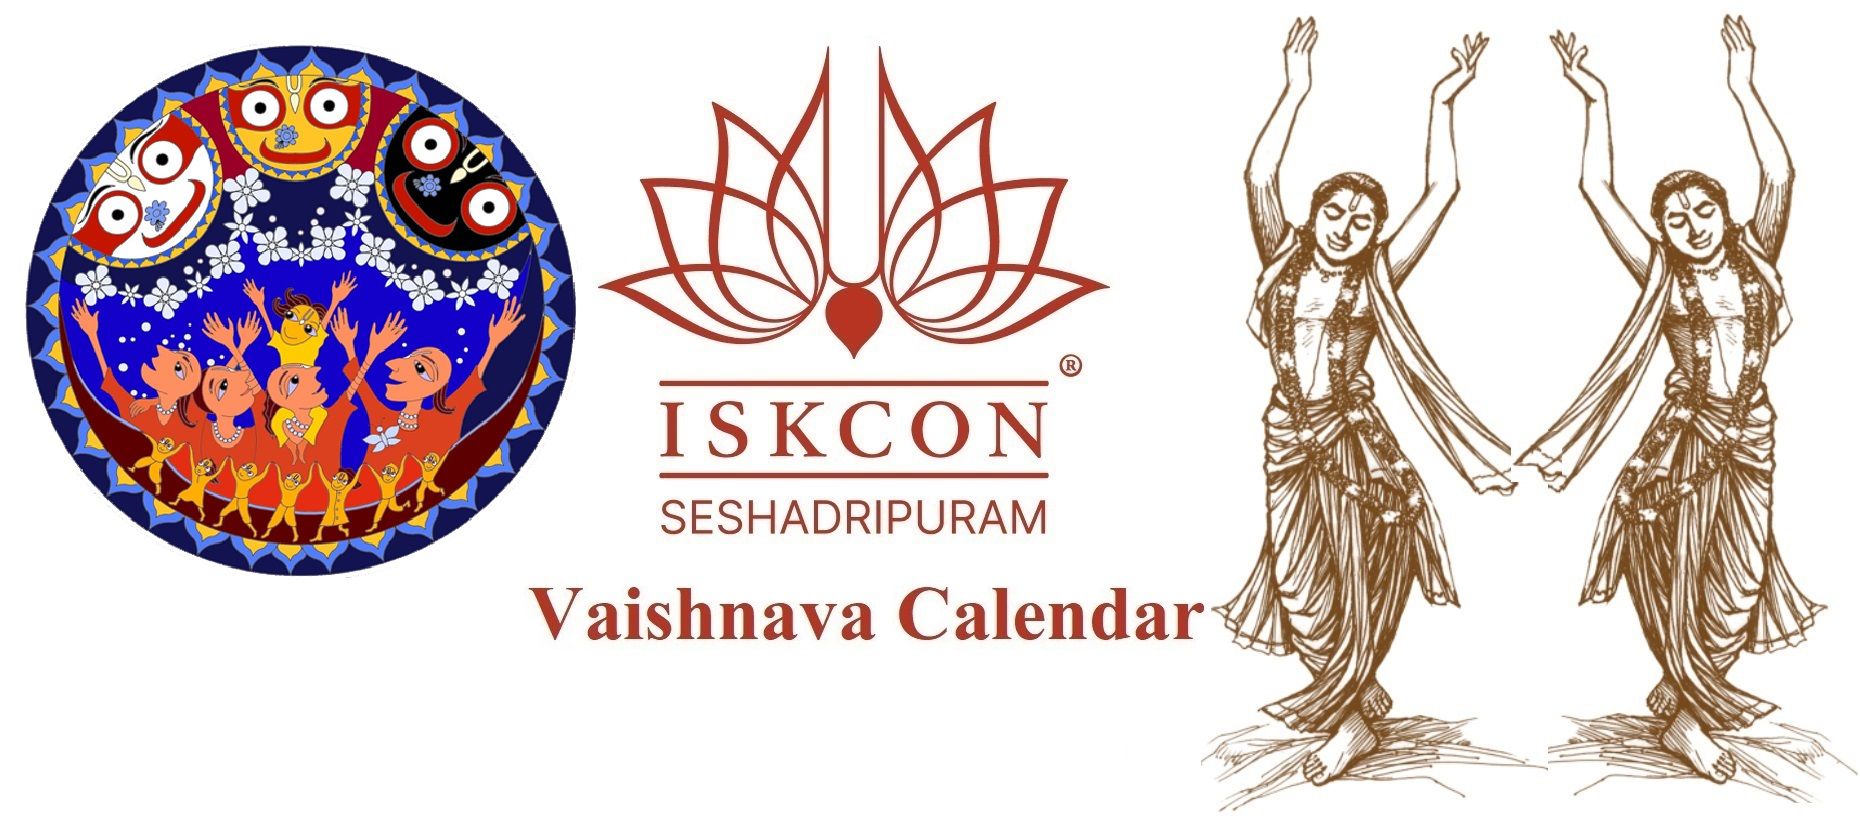 Vaishnava Calendar ISKCON Seshadripuram